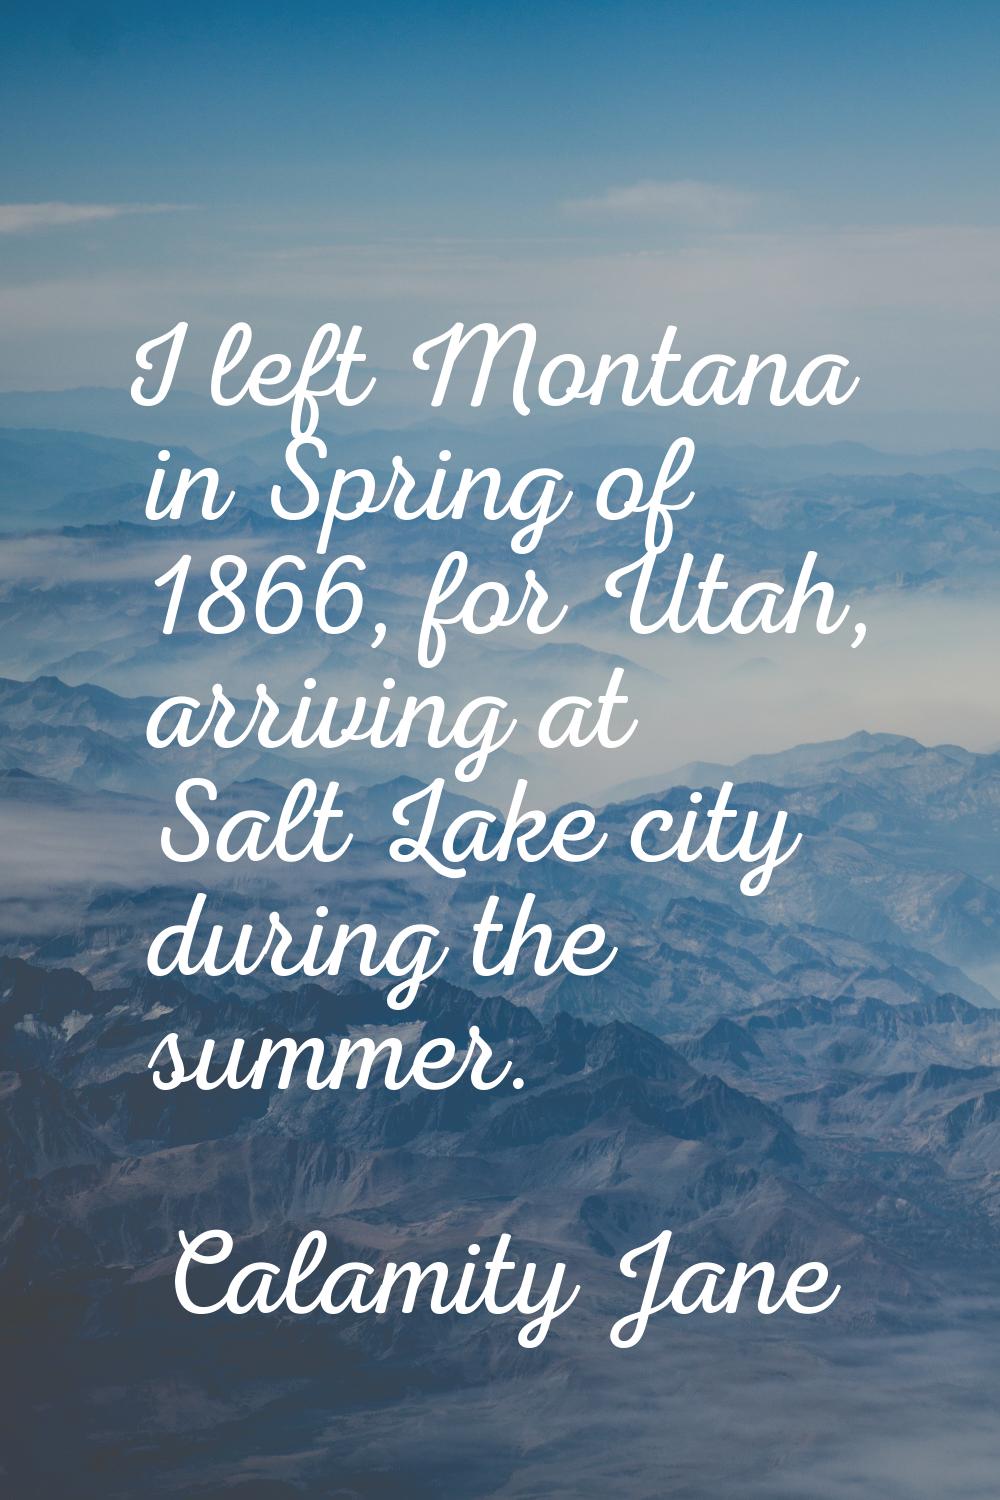 I left Montana in Spring of 1866, for Utah, arriving at Salt Lake city during the summer.